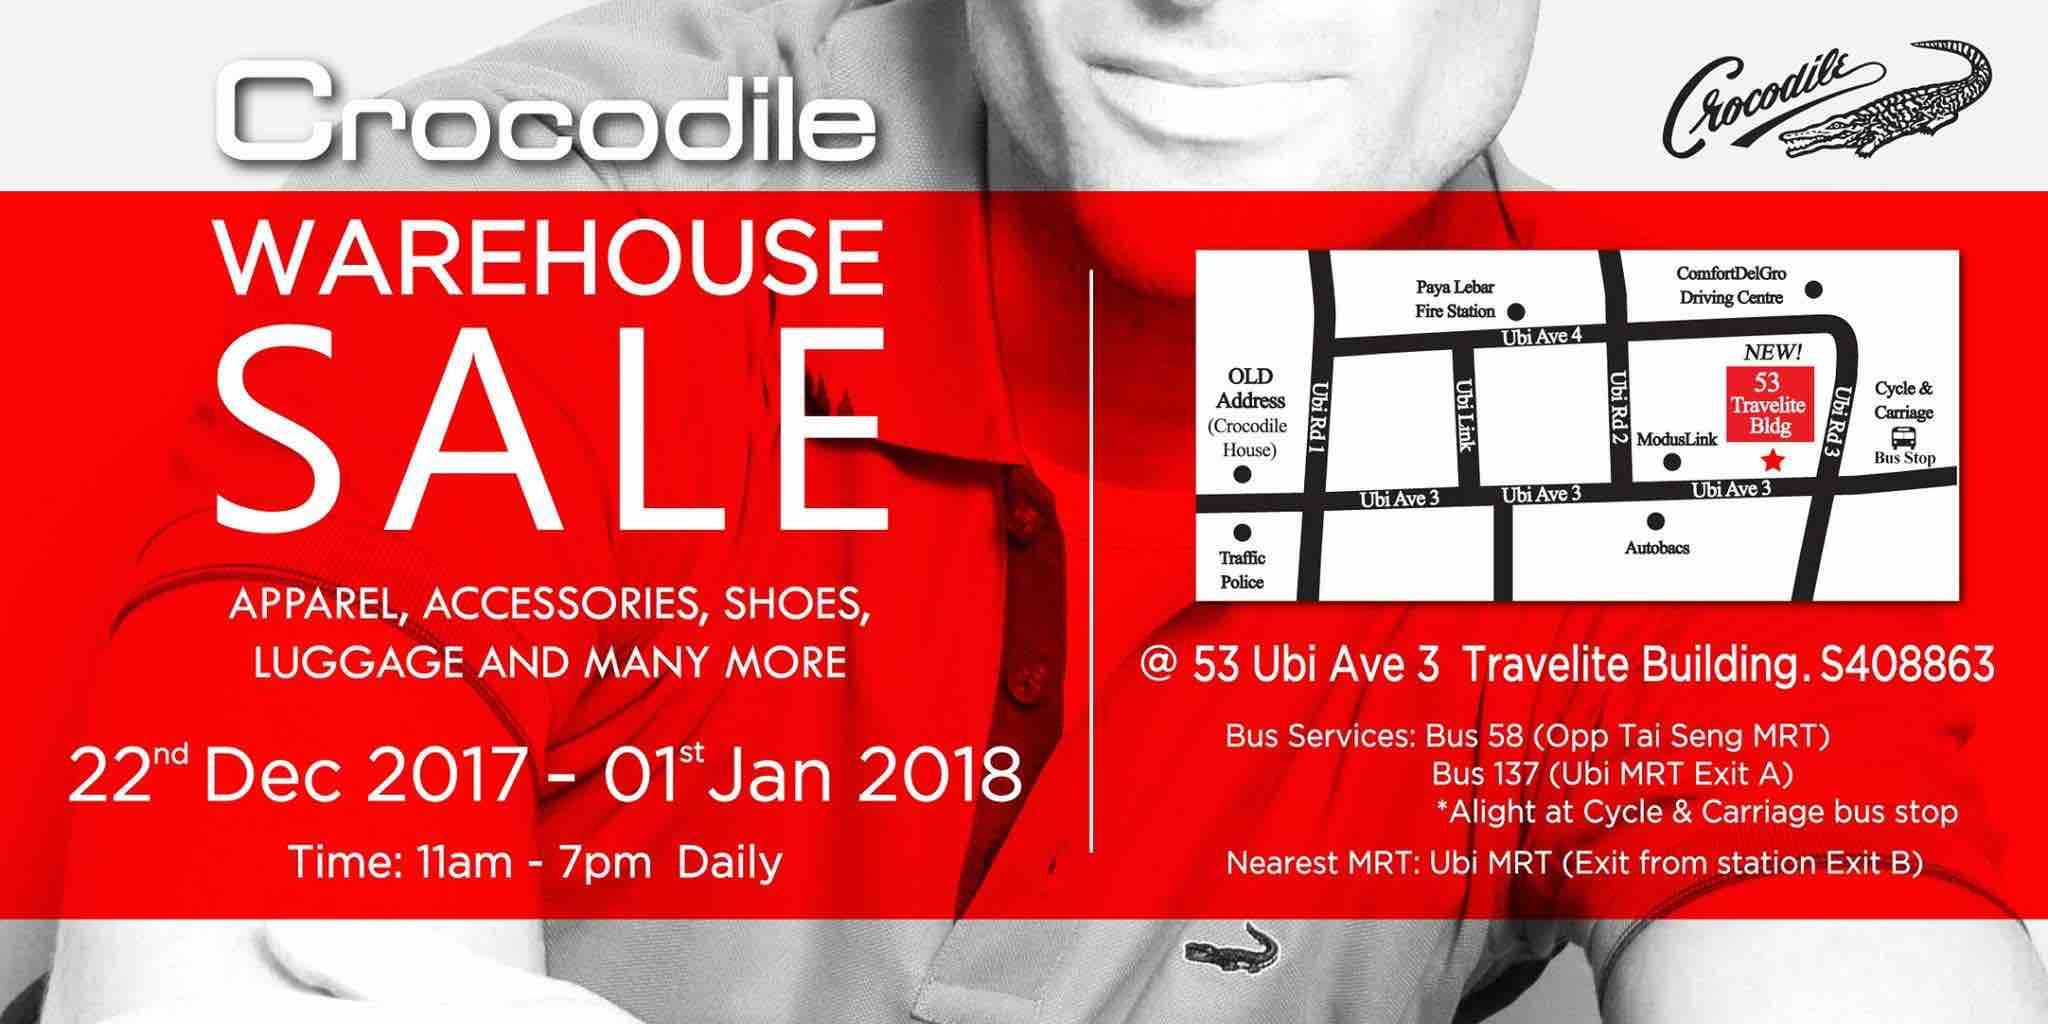 Crocodile Singapore Annual Warehouse Sale Promotion 22 Dec 2017 – 1 Jan 2018